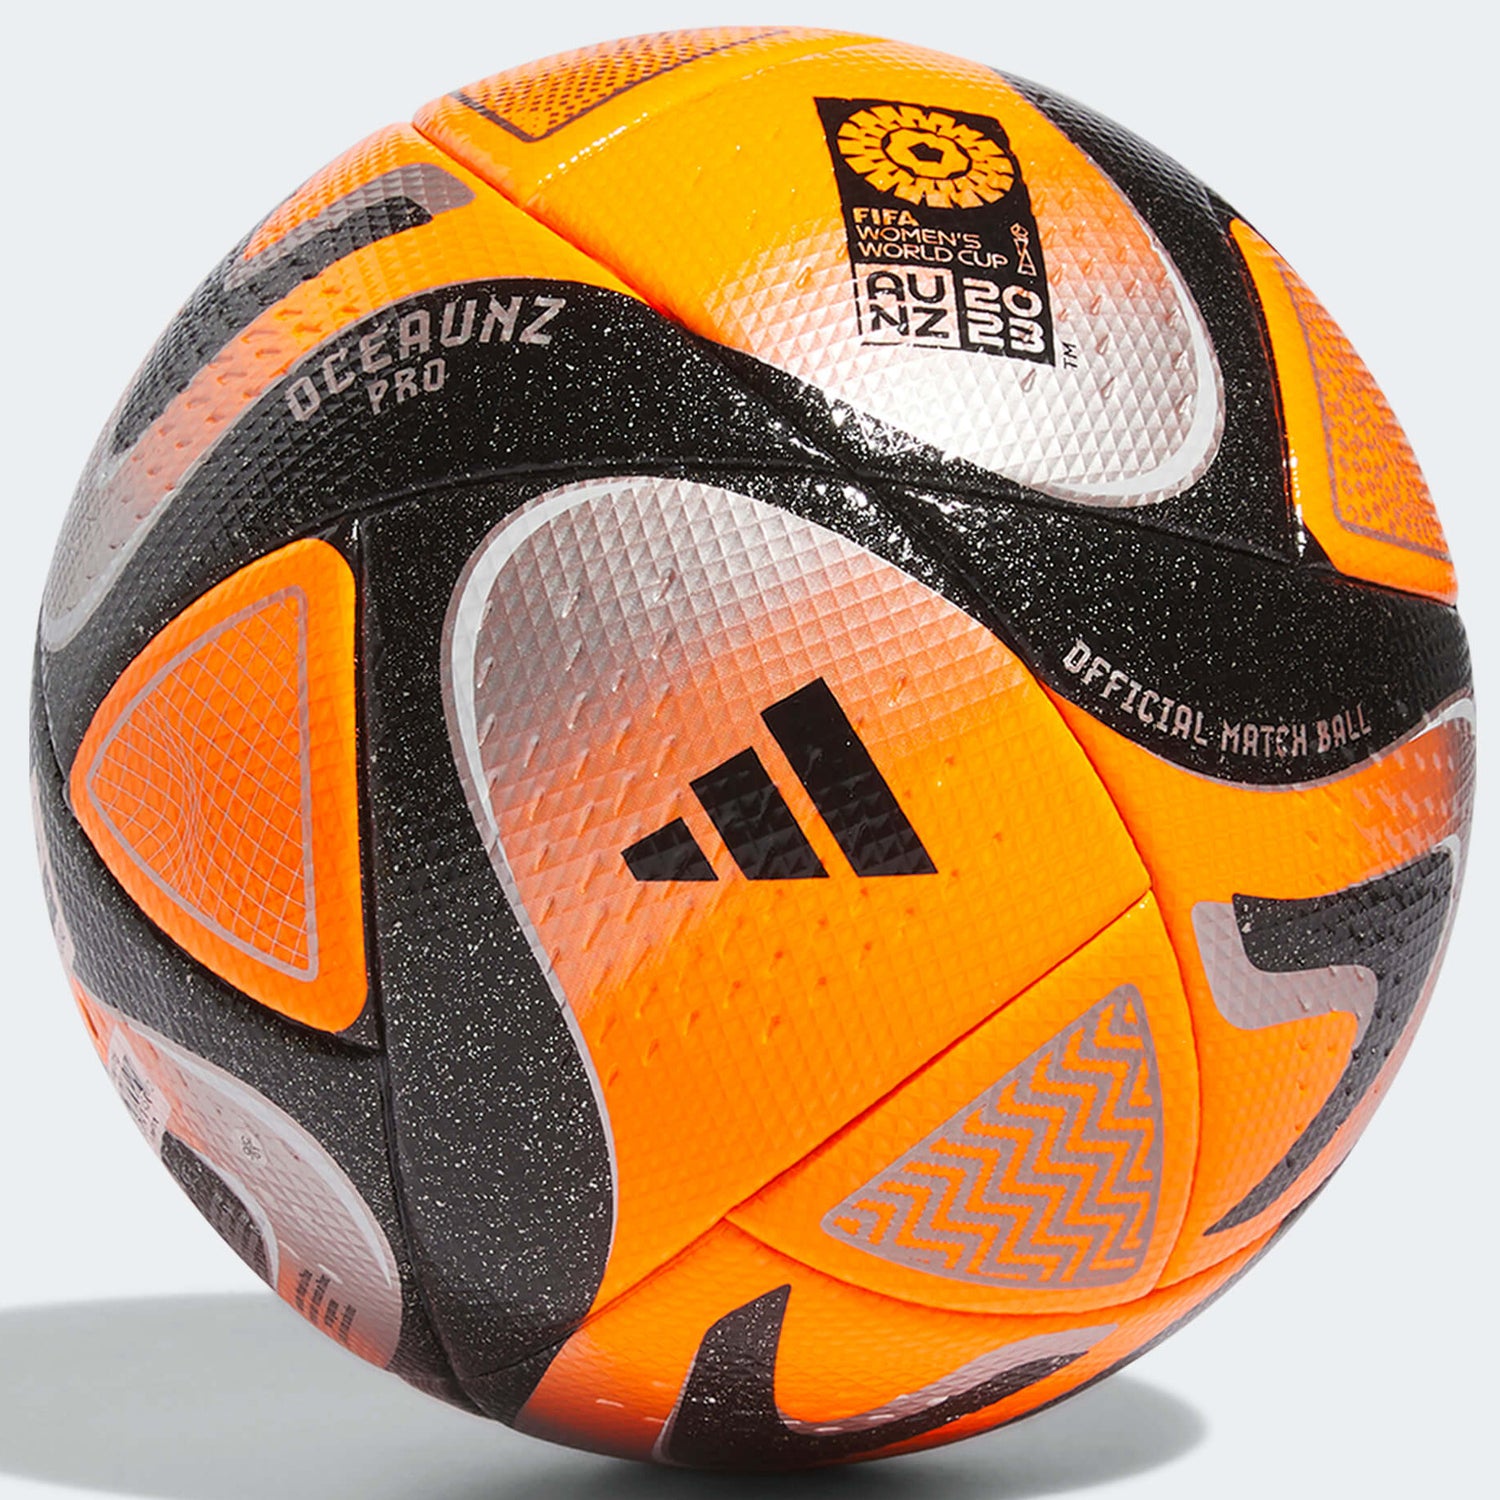 adidas Oceaunz Pro Winter Official Match Ball - Solar Orange-Black-Silver (Front)